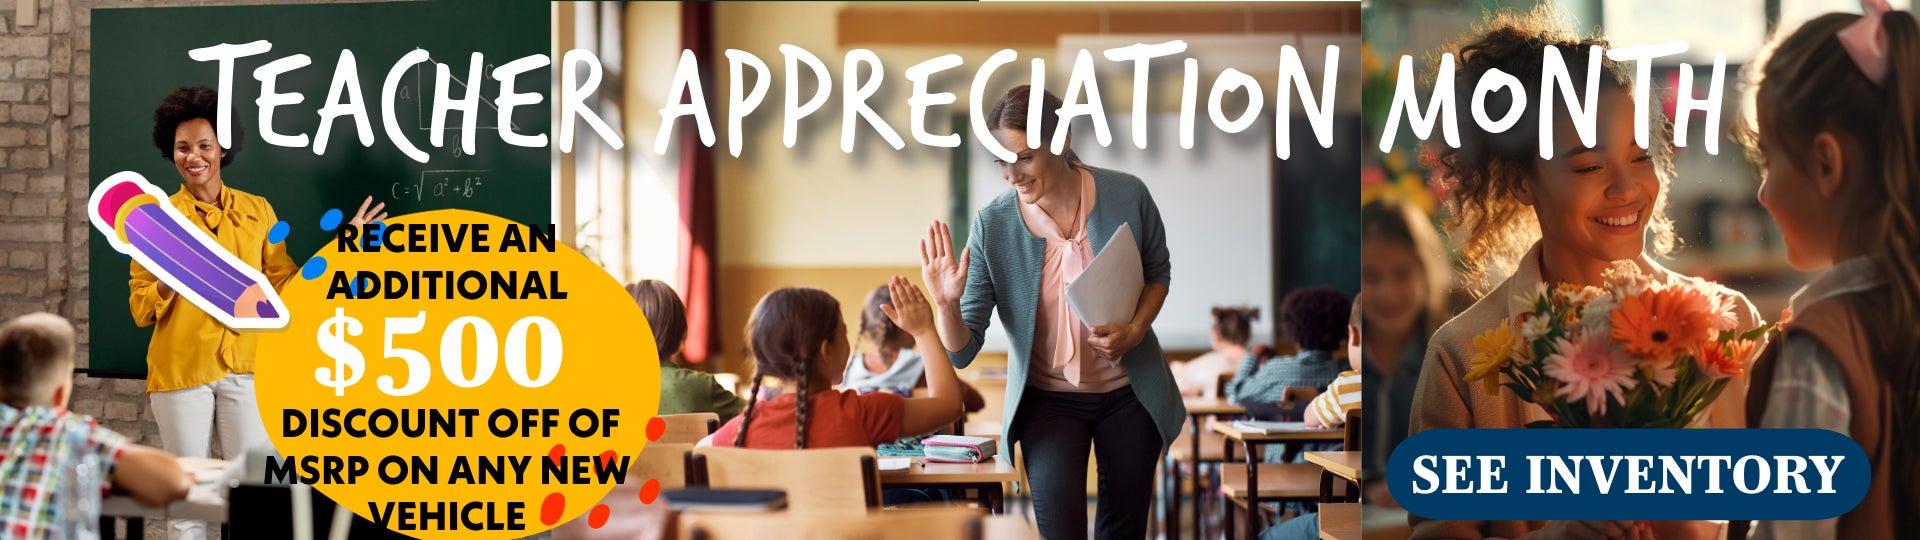 TEACHER APPRECIATION 